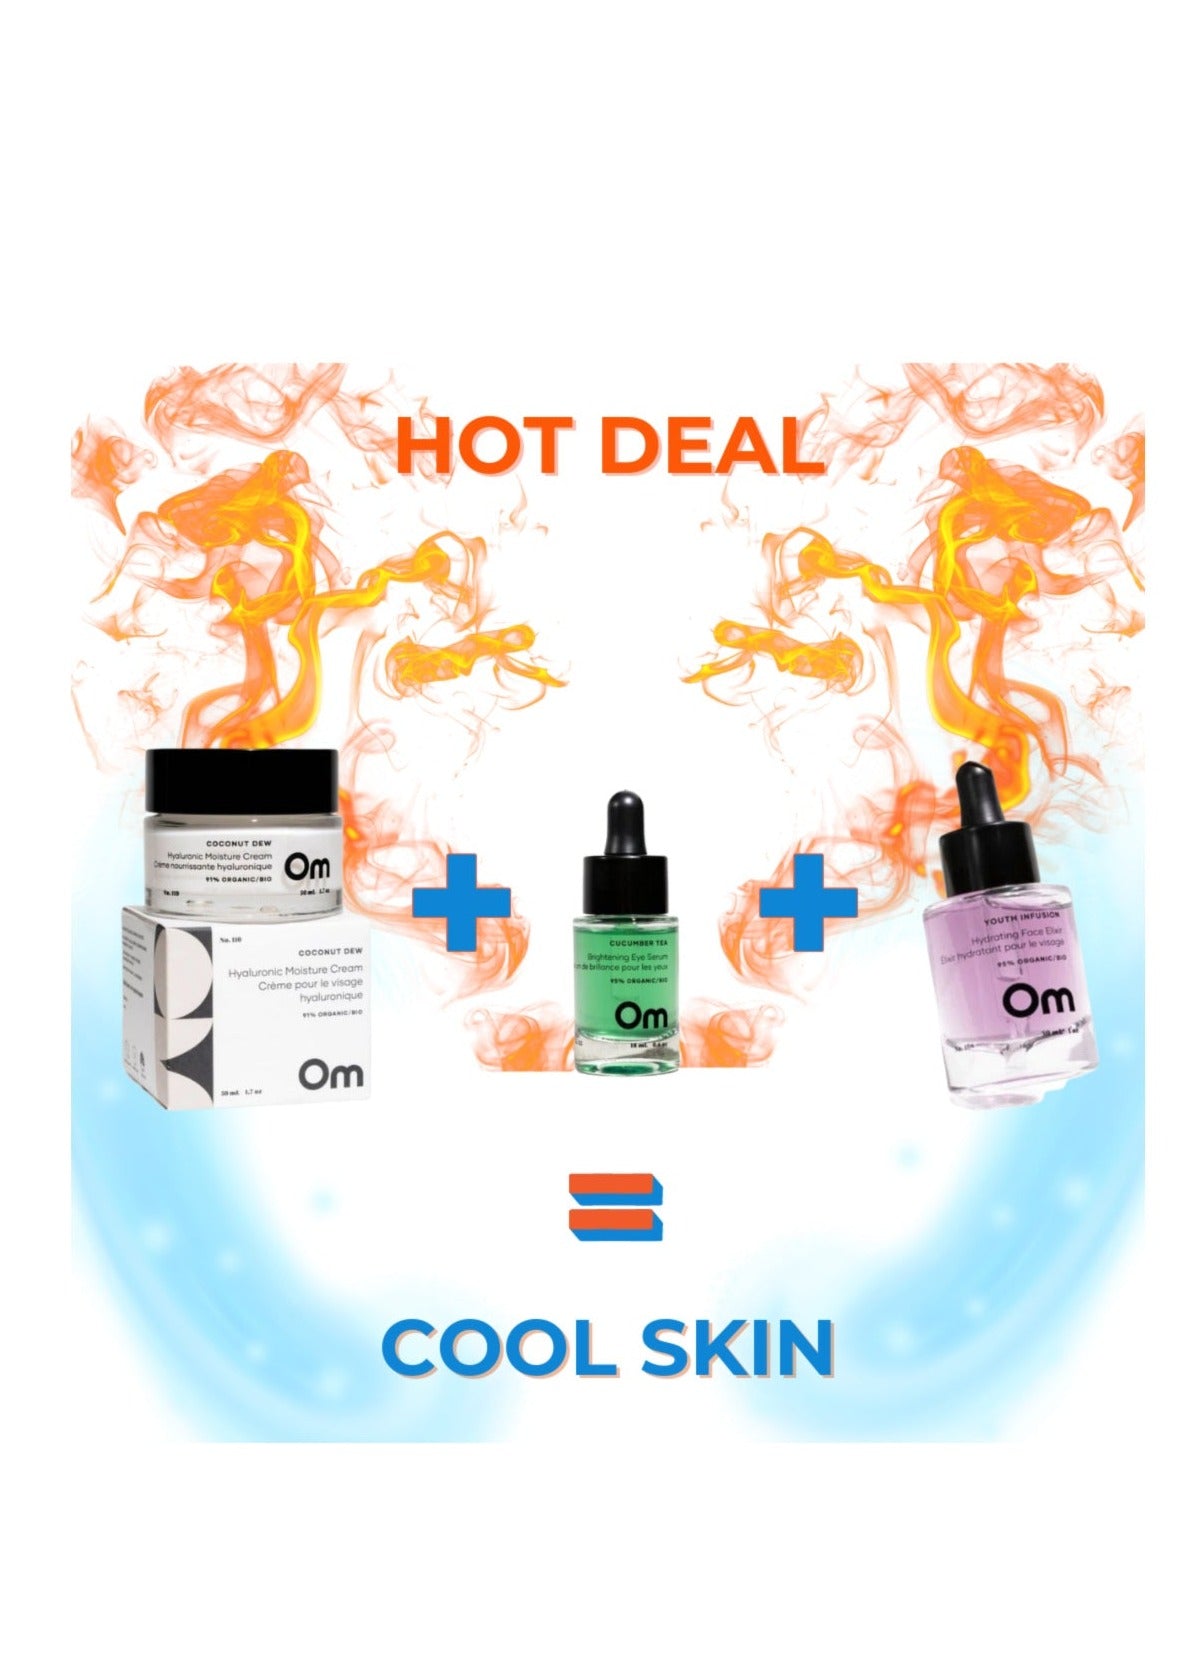 Hot Deal = Cool Look